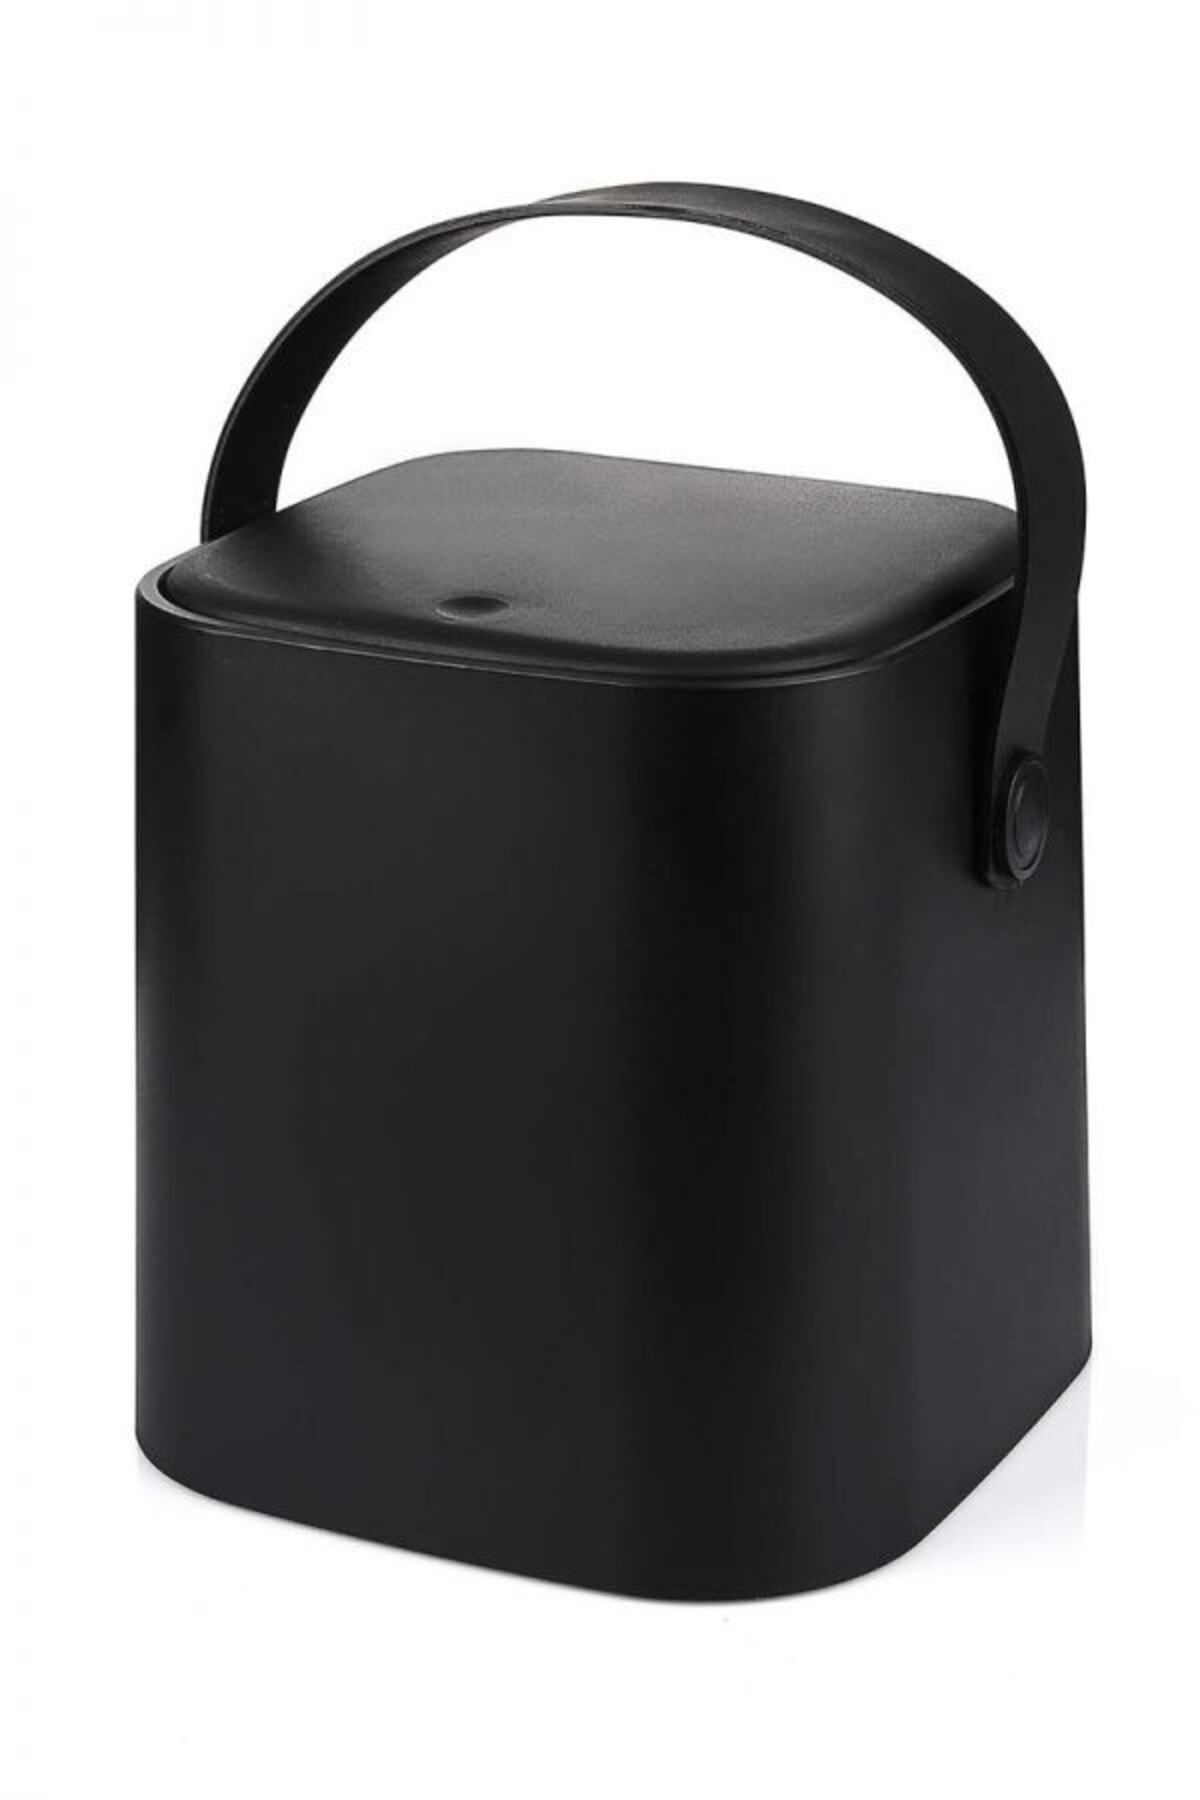 Carat Home Click Kapaklı Tutma Saplı Iç Kovalı Tezgah Üst Mutfak Çöp Kovası 4 Lt - Siyah